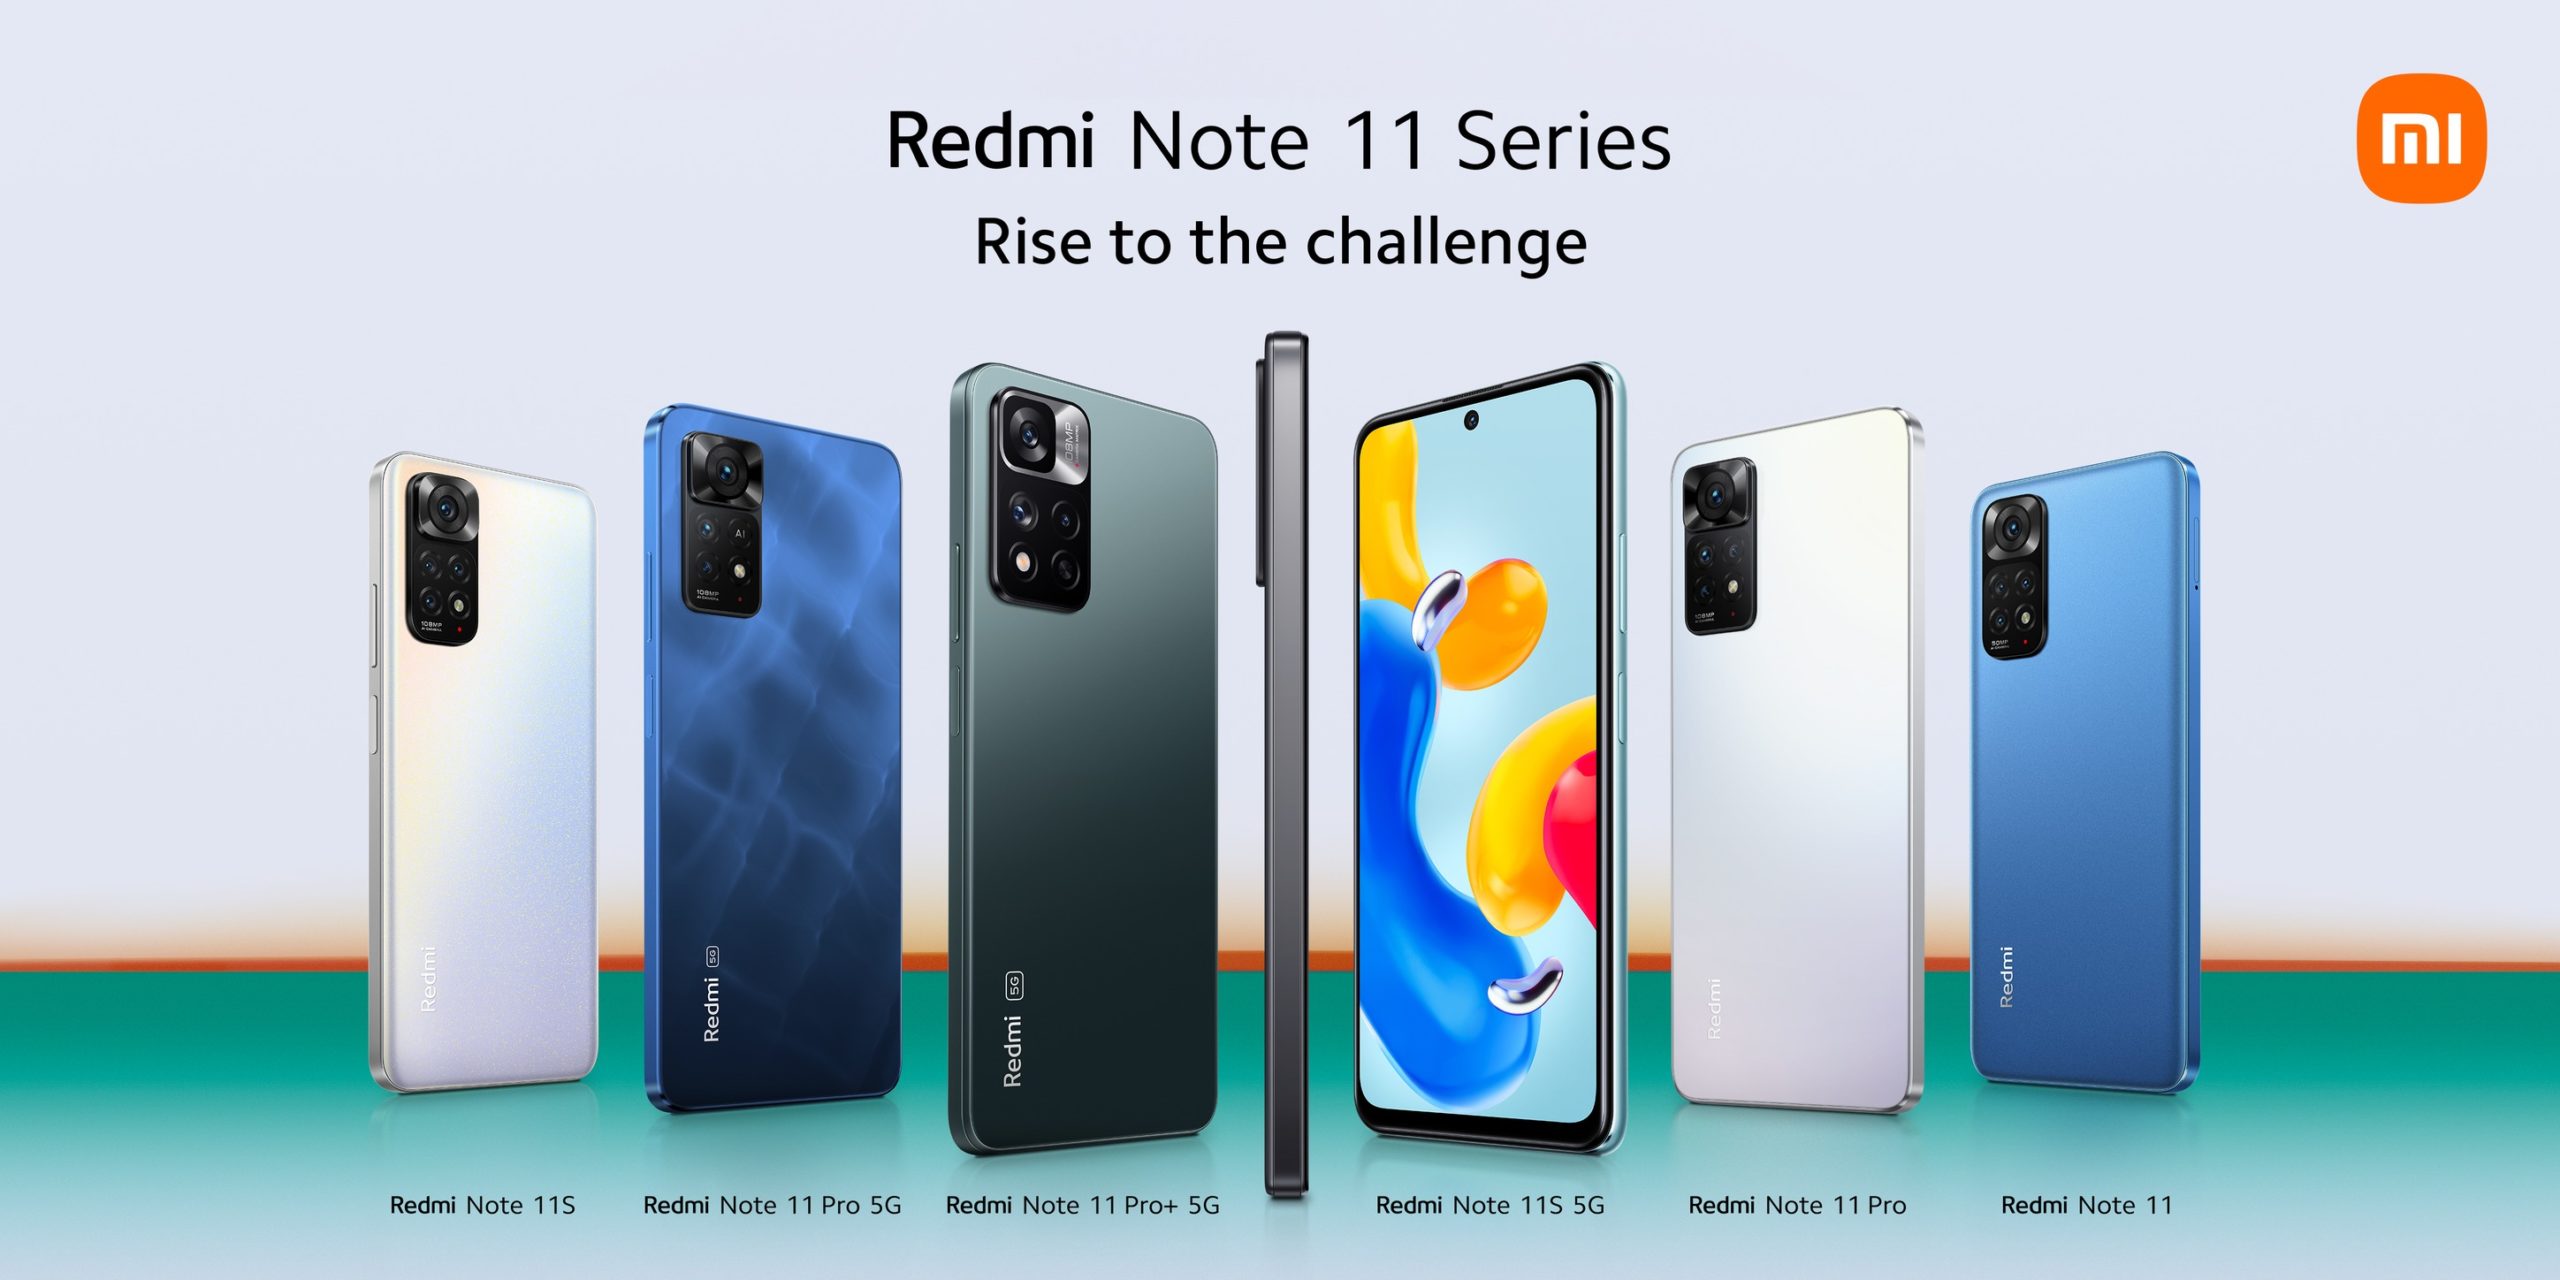 Redmi Note 11 Pro+ 5G & Redmi Note 11S 5G